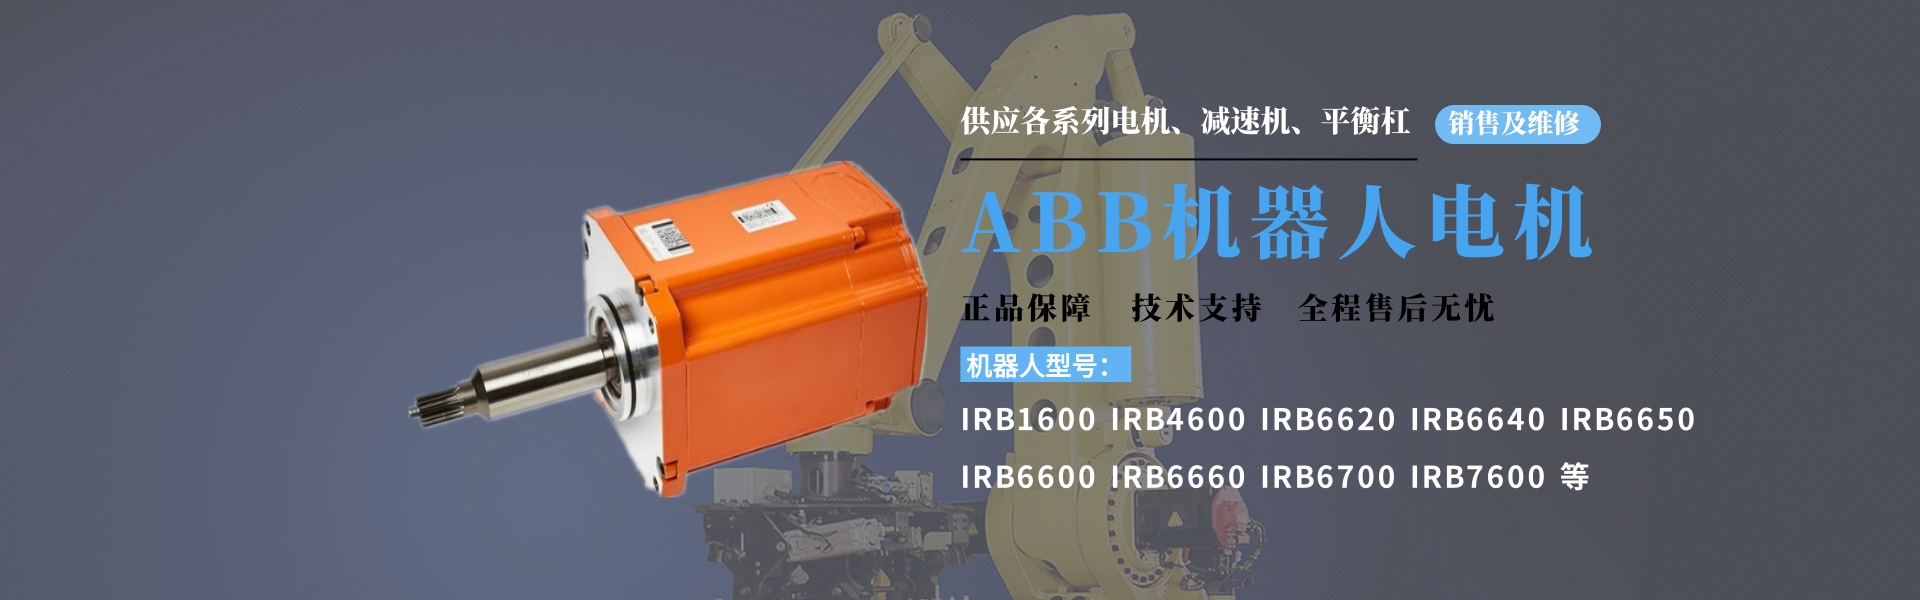 ABB机器人减速机3HAC024316-005 现货 维修 ABB机器人减速机,ABB机器人齿轮,ABB机器人减速机3HAC024316-005,ABB机器人齿轮3HAC024316-005,ABB机器人减速机维修